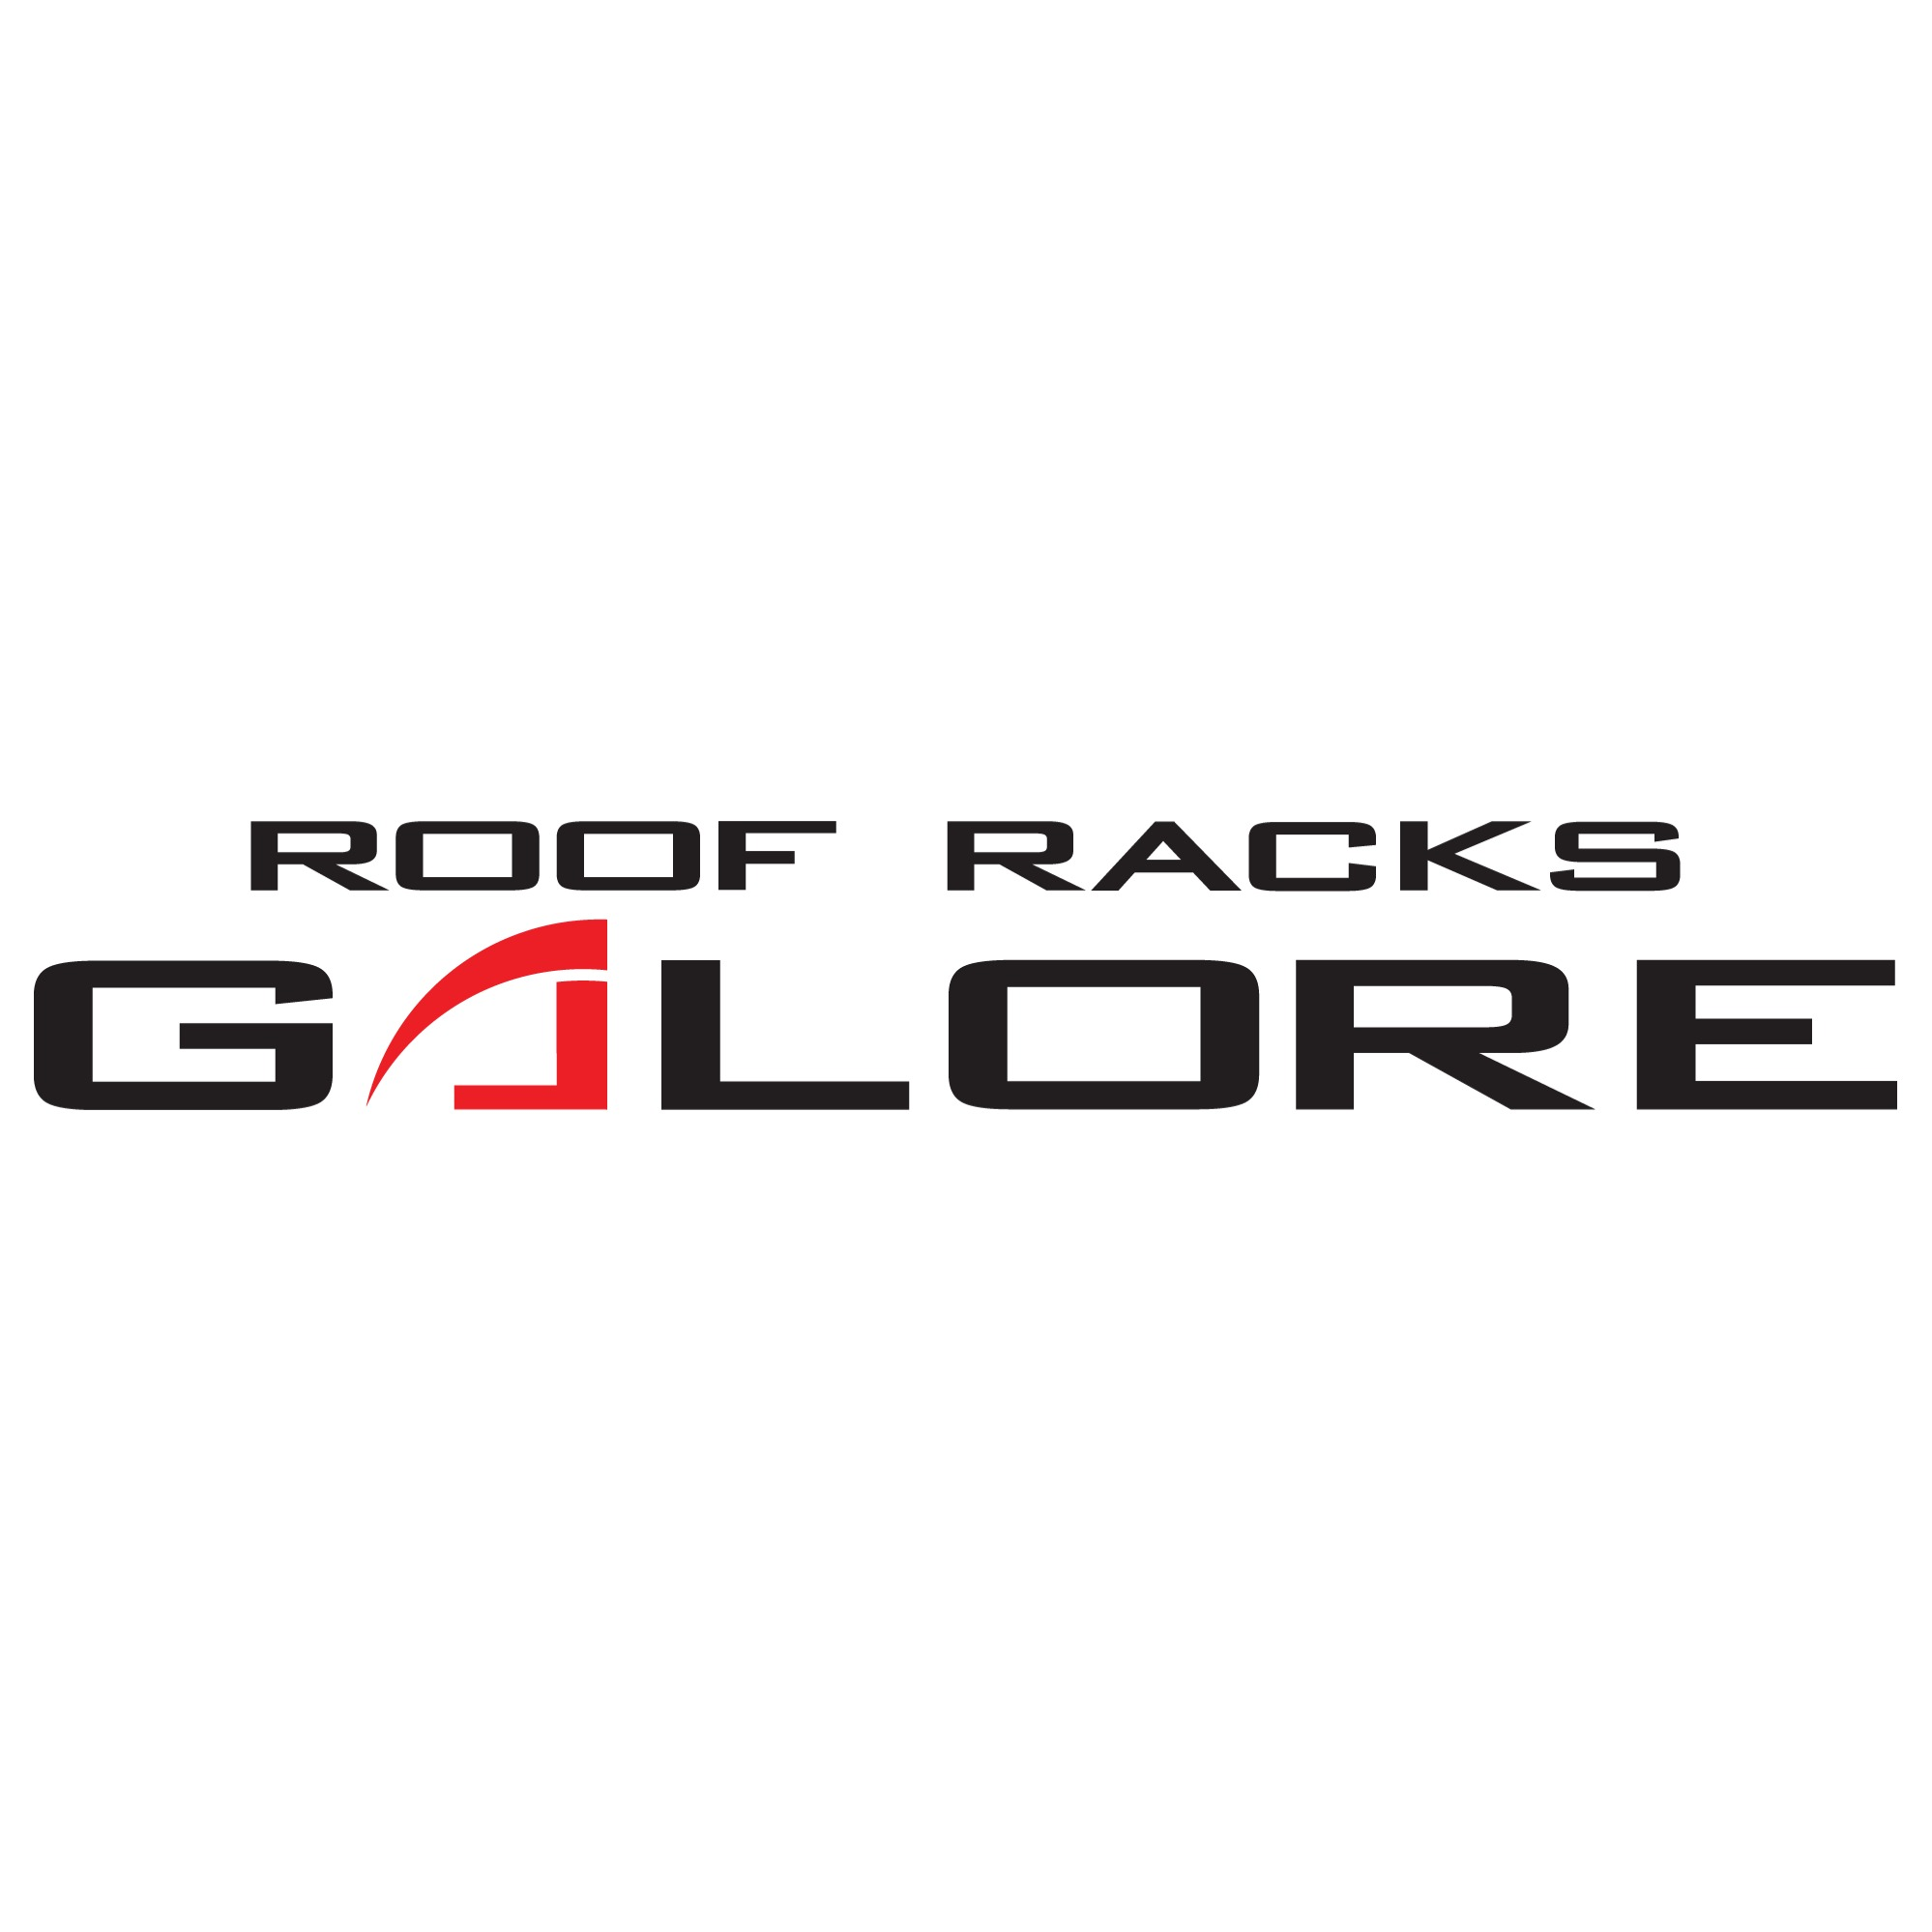 Roof Racks Galore Logo - North Lakes Roof Racks Galore, North Lakes Superstore North Lakes (07) 3103 8414